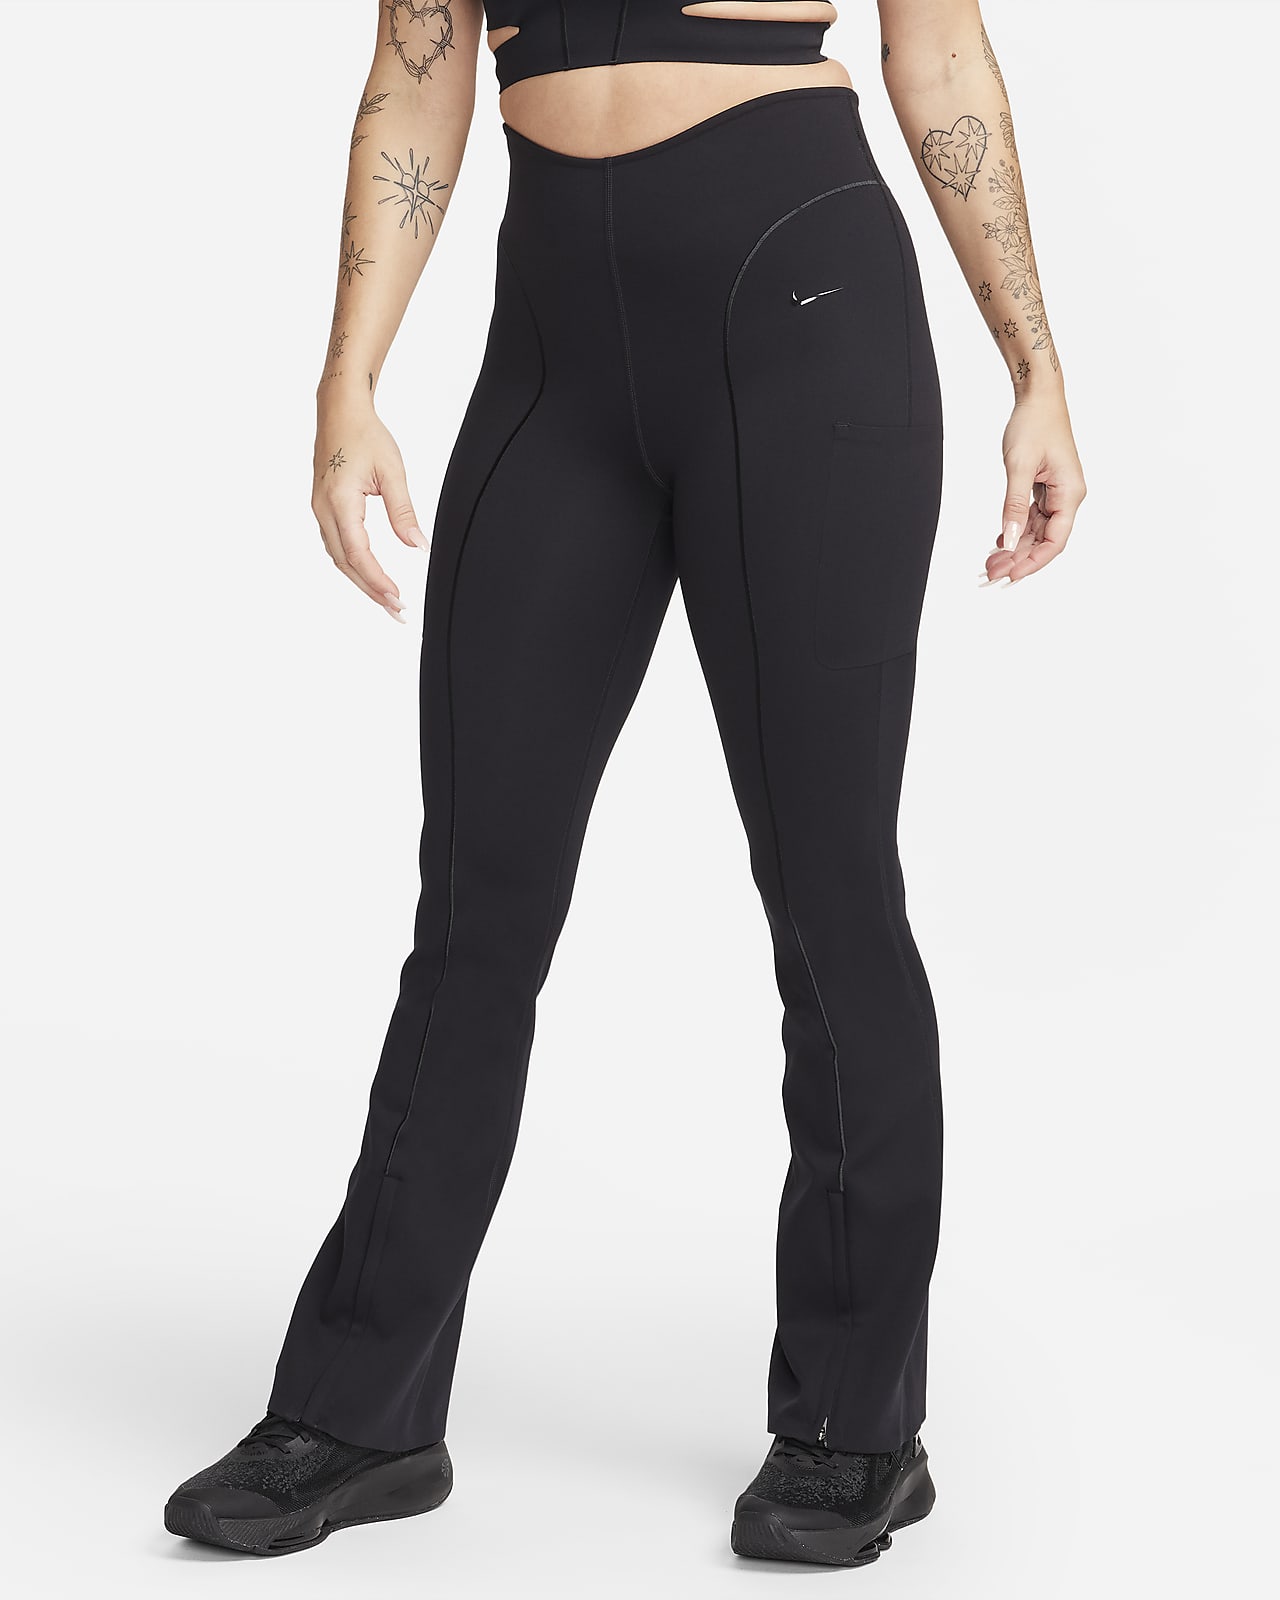 Pants con bolsillos de cintura alta Dri-FIT para mujer Nike FutureMove